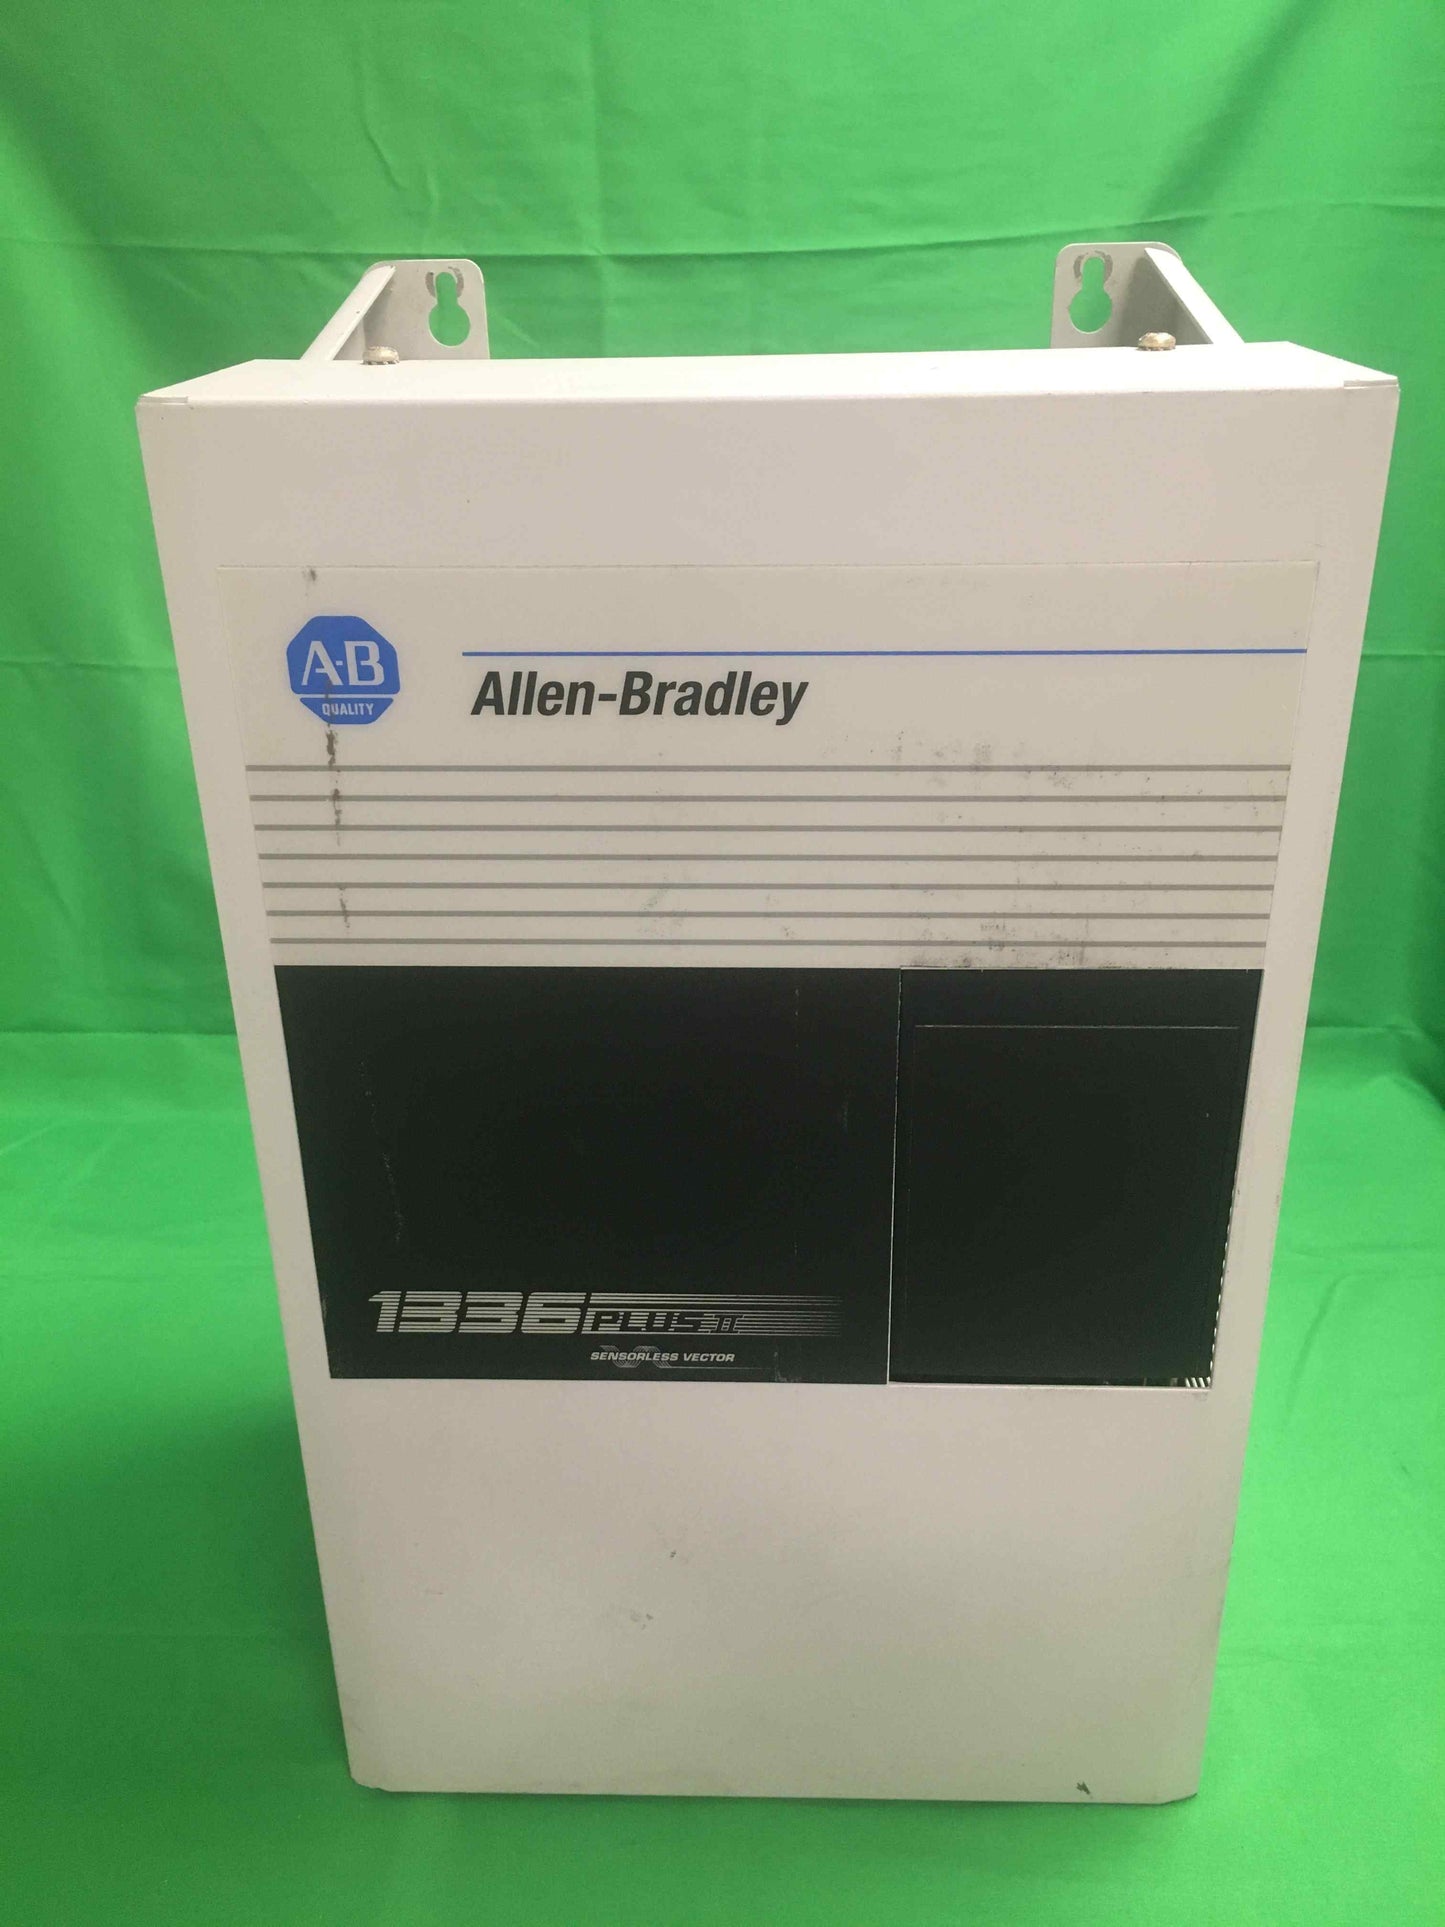 Allen-Bradley-1336 PLUS 2